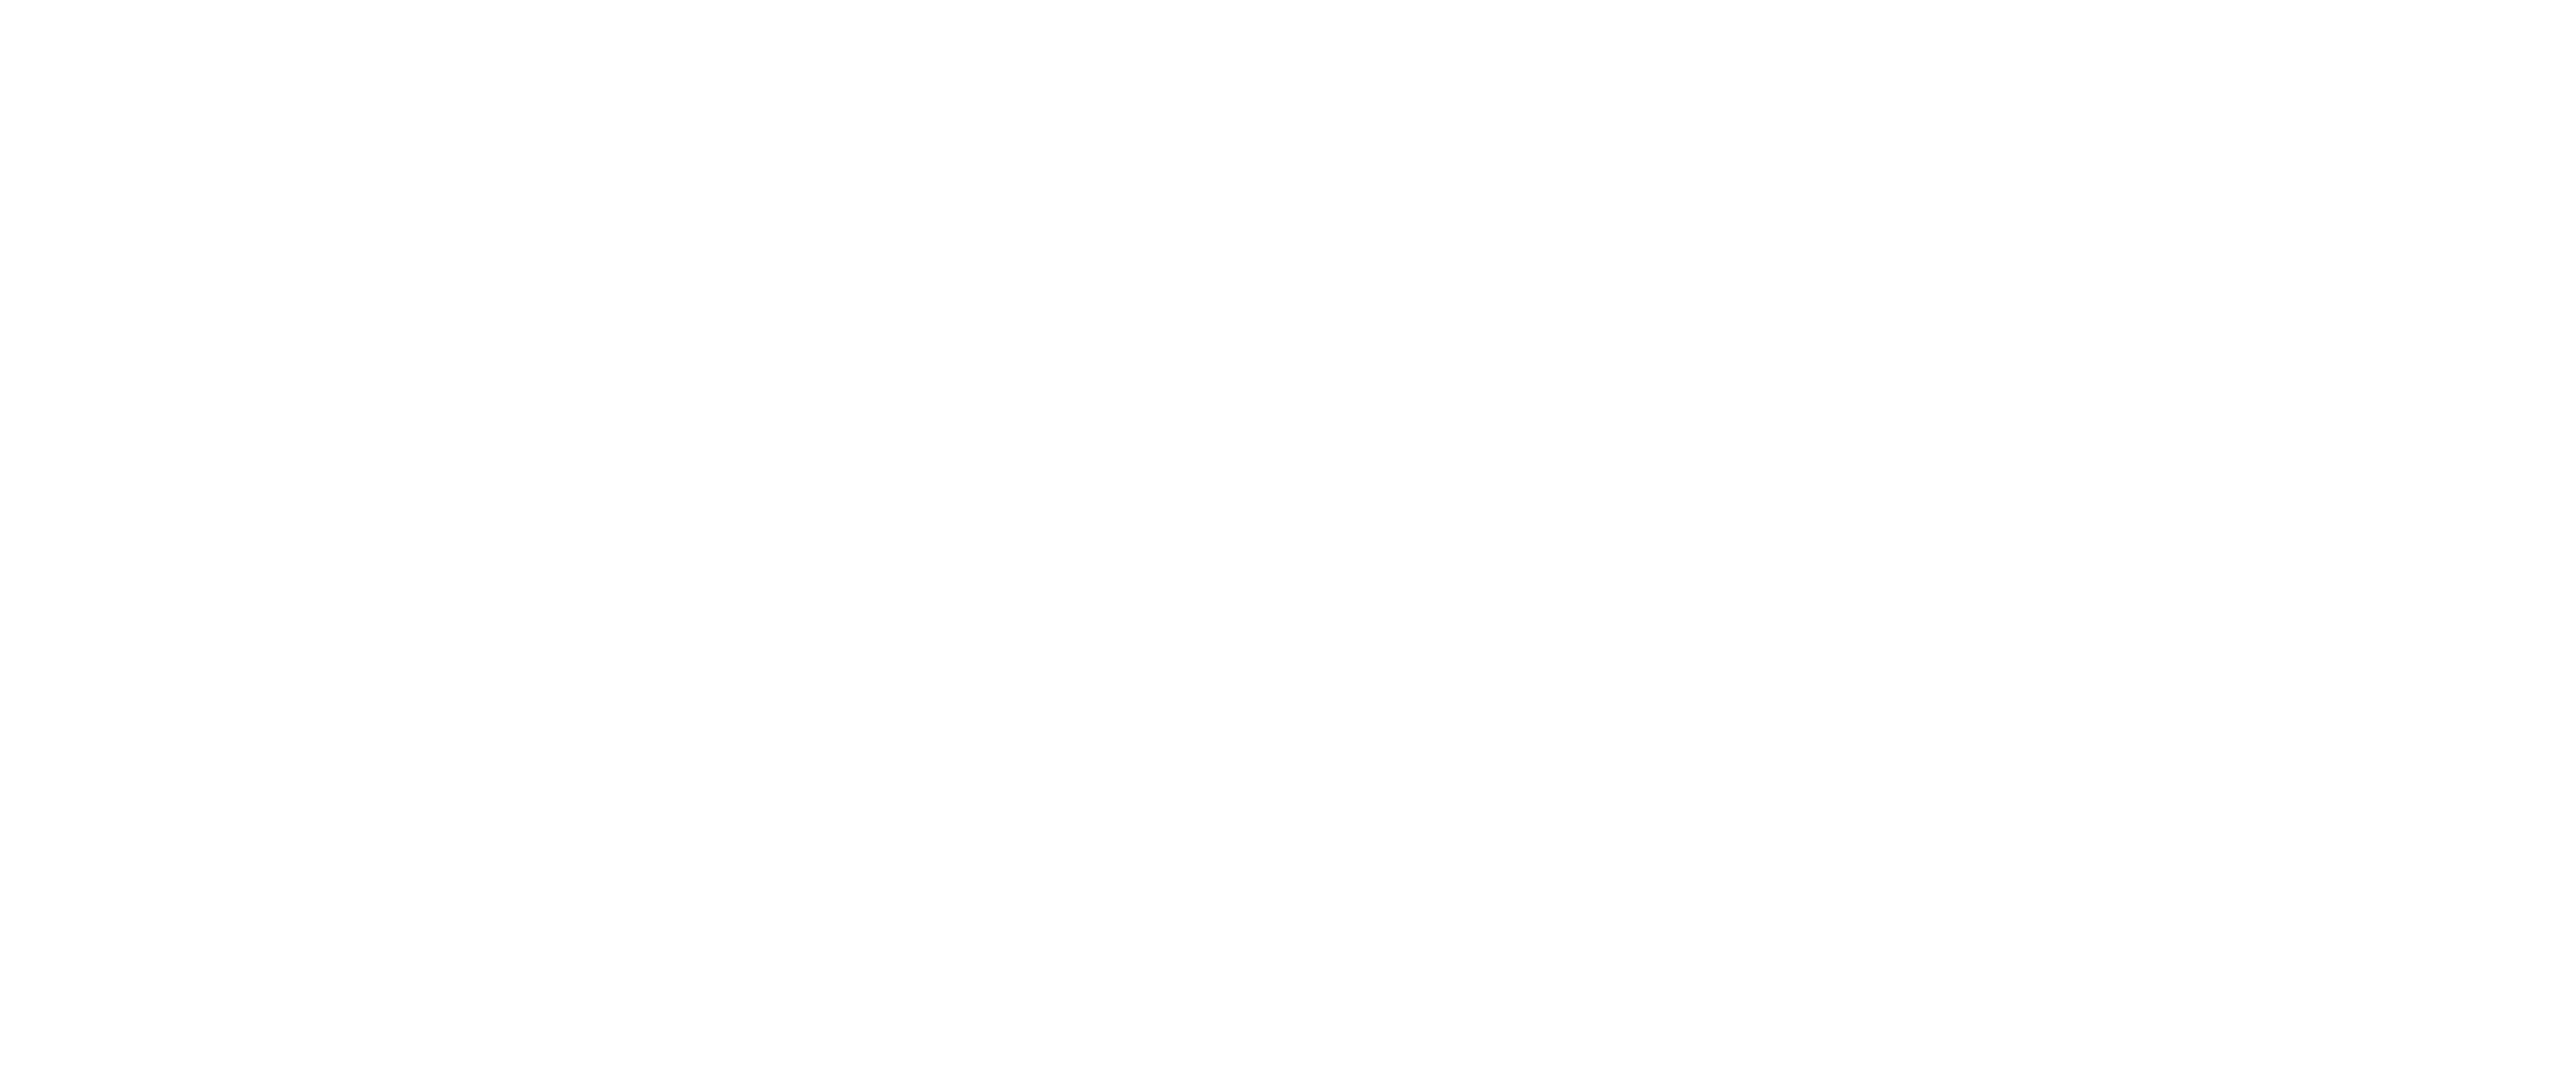 Hydro Int - CRH Logo